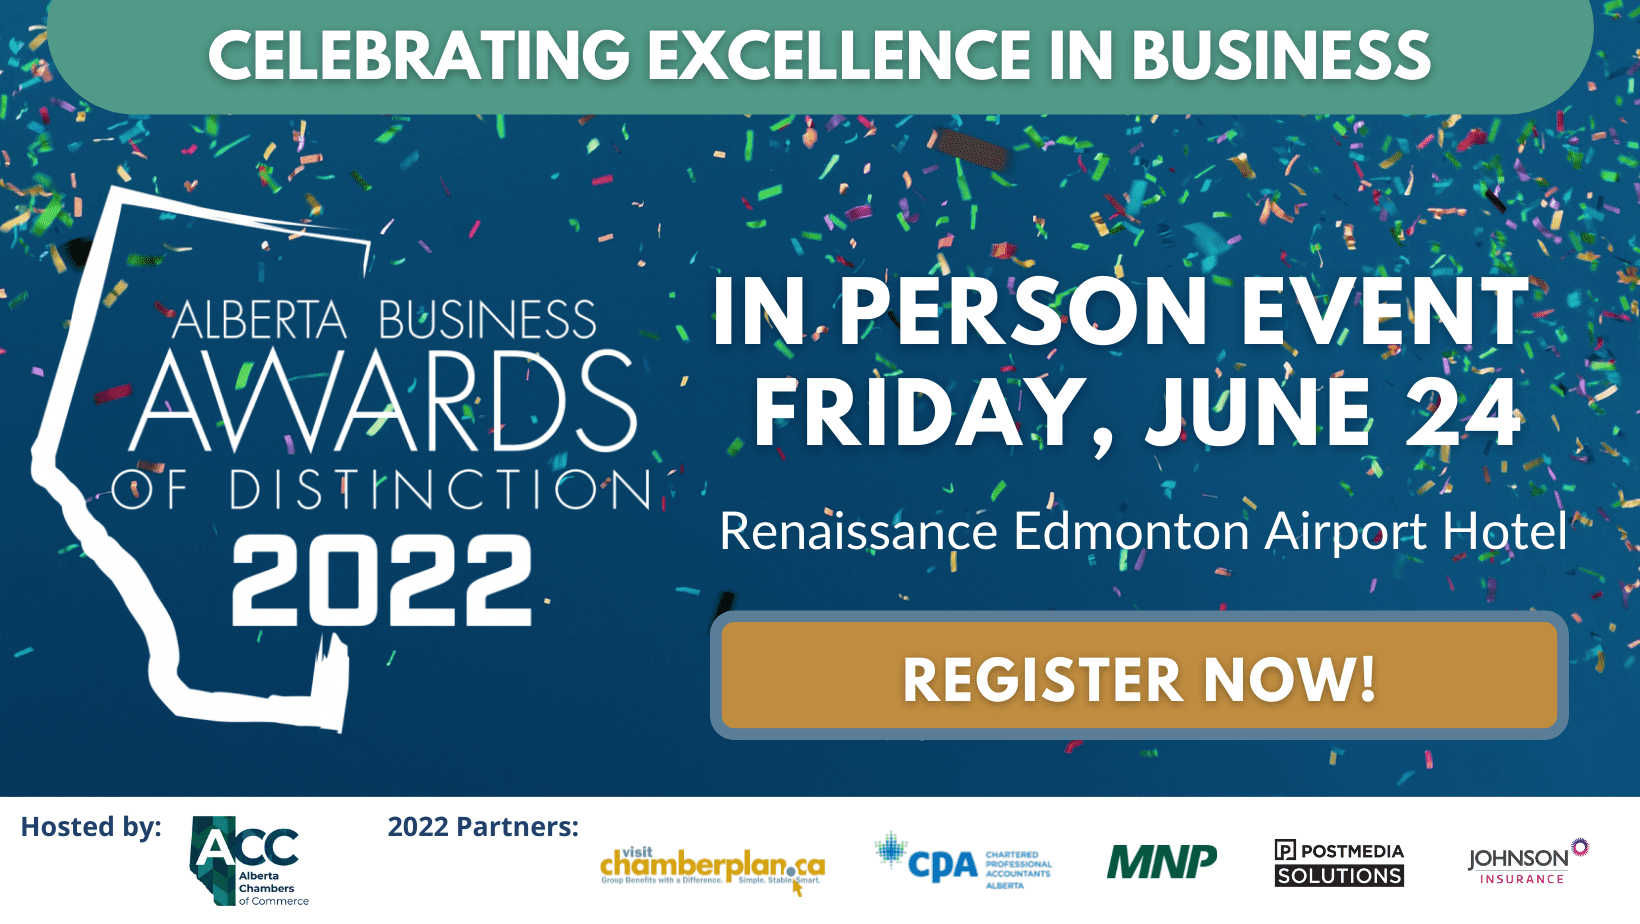 Alberta Business Awards of Distinction 2022